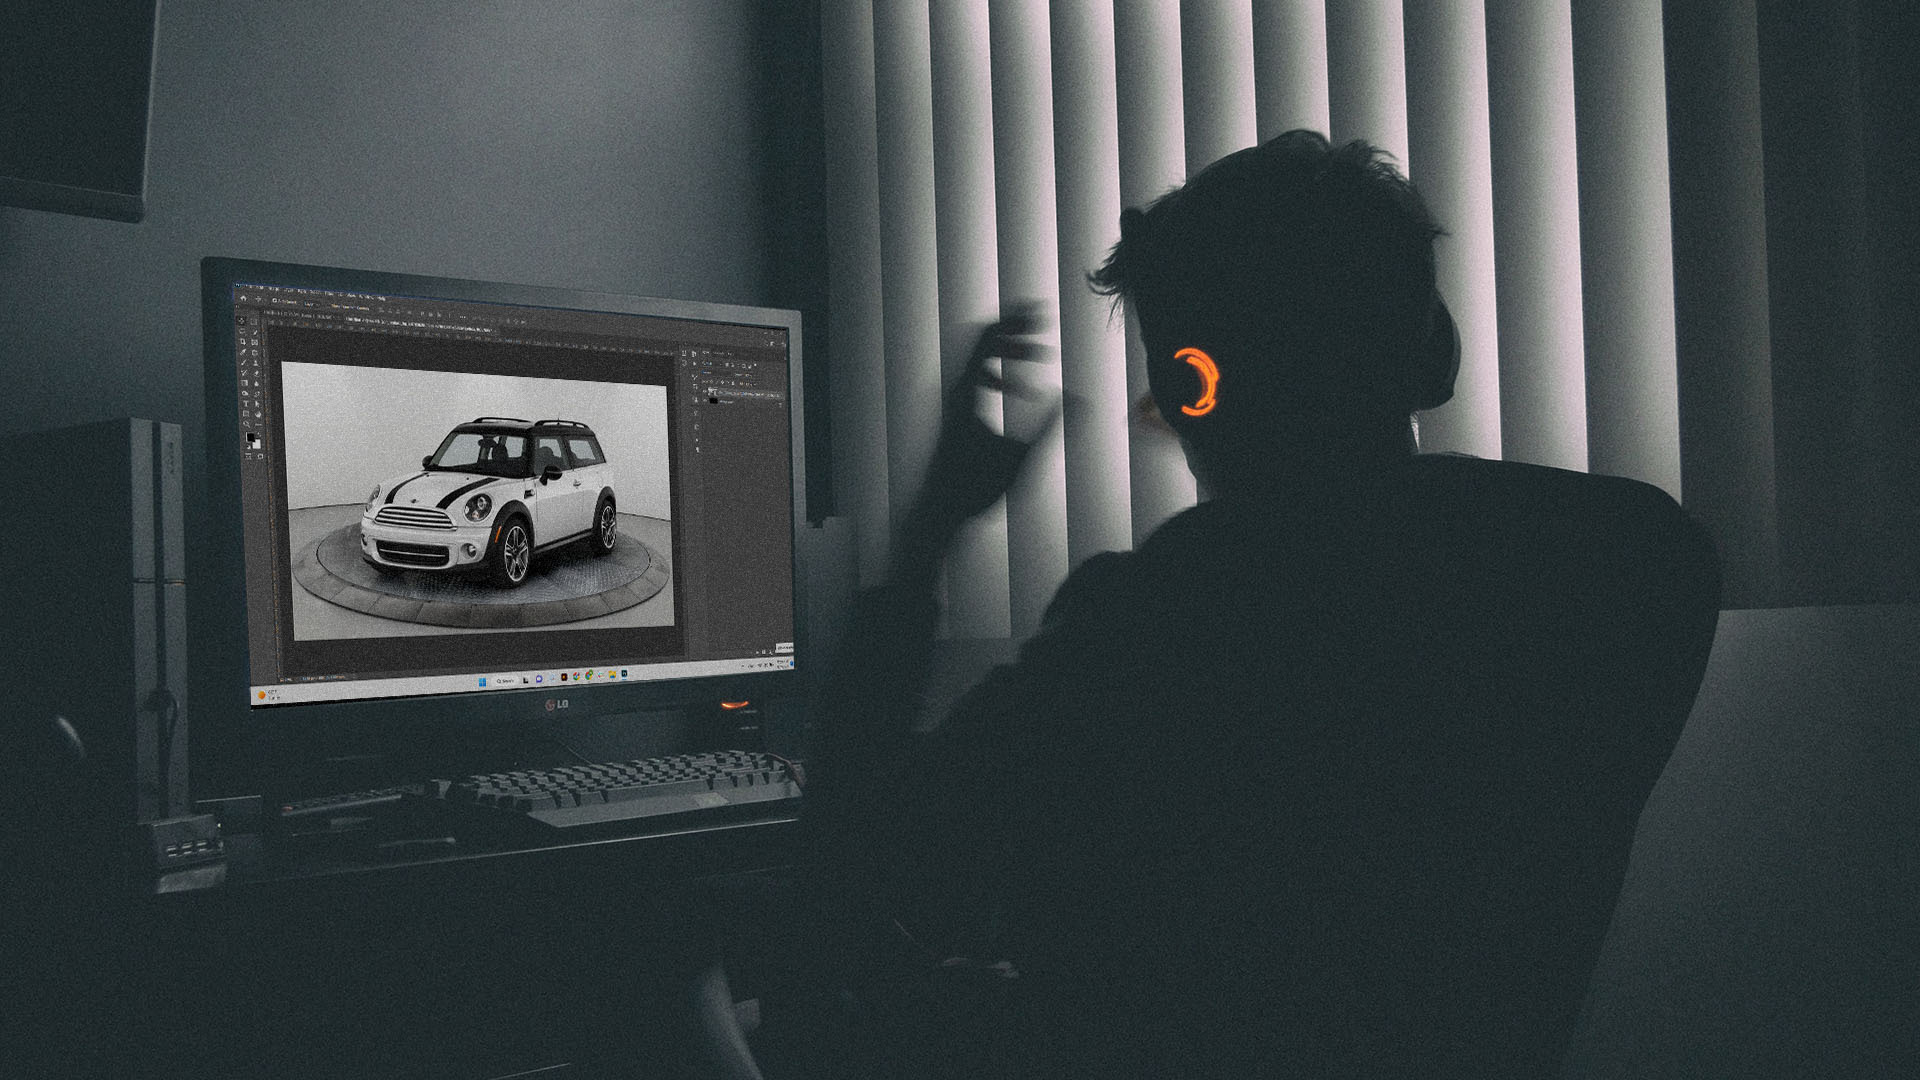 How to edit car photos